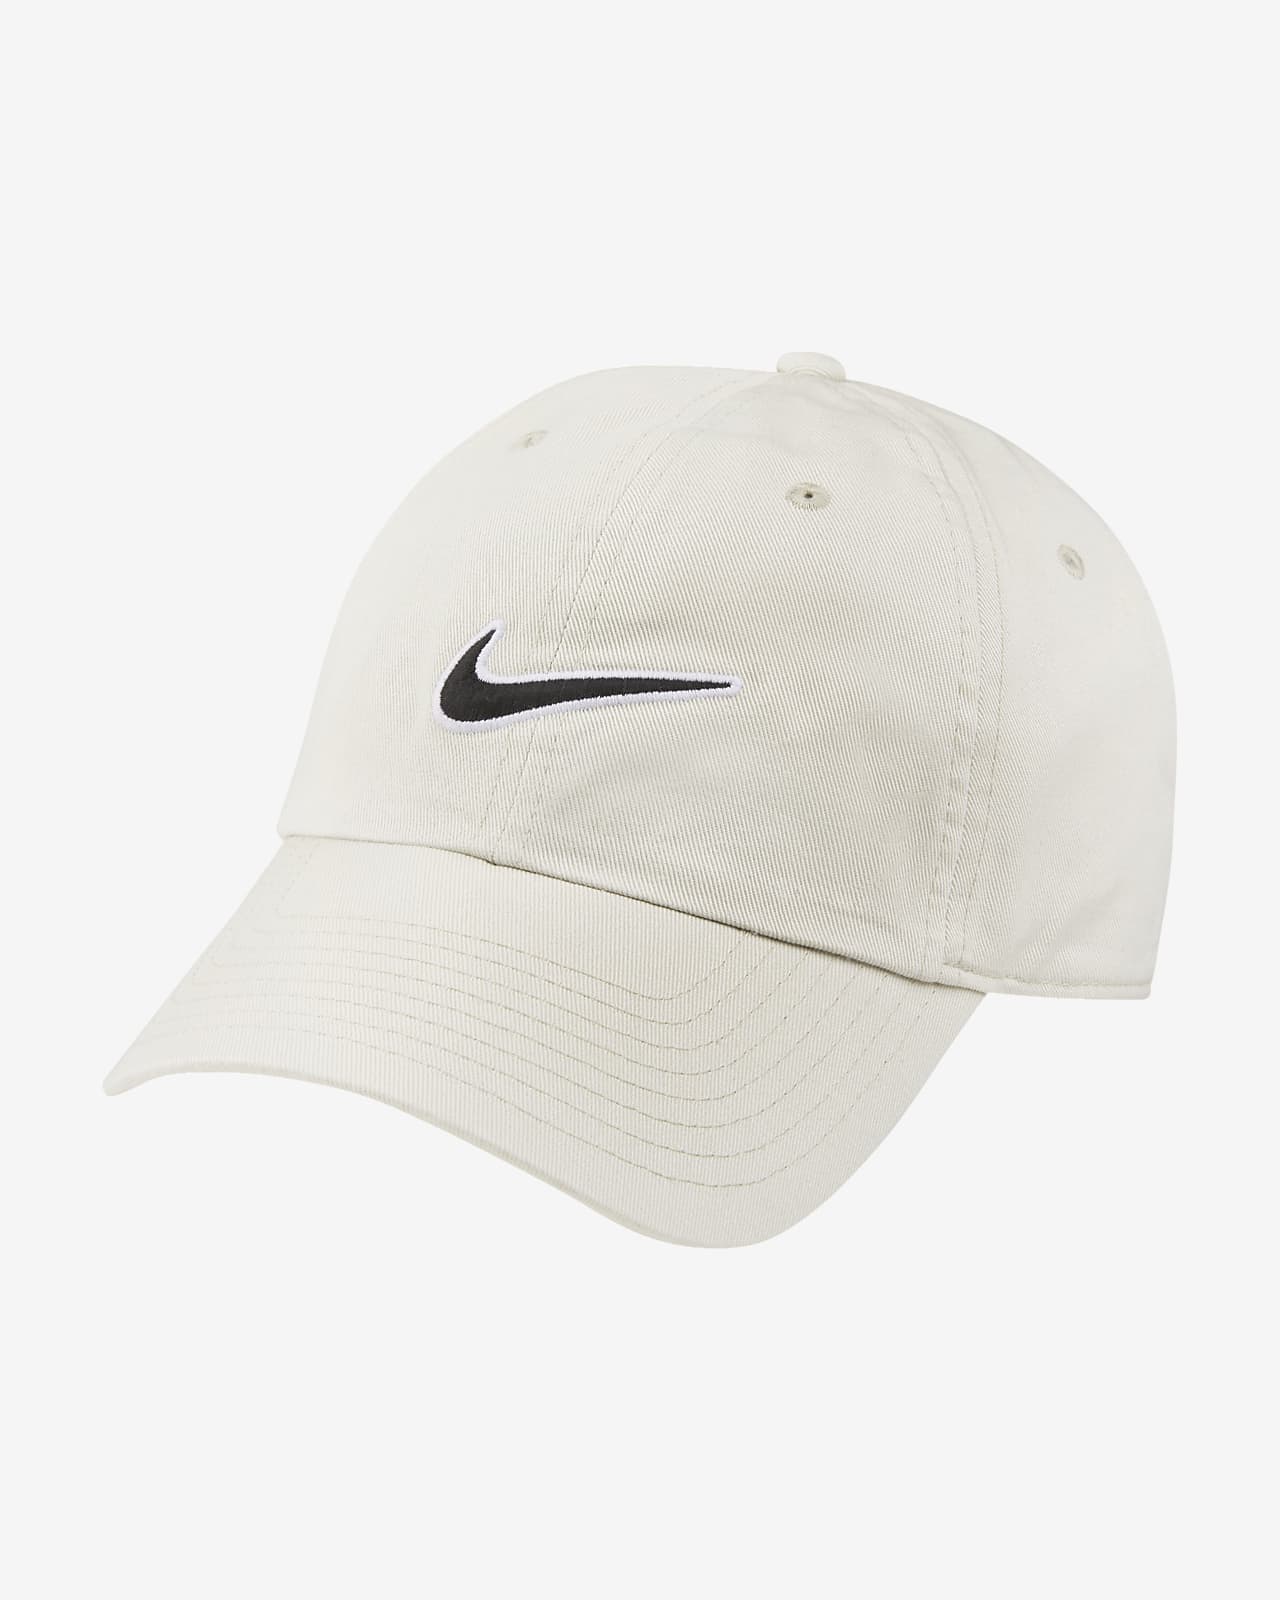 Nike heritage 86 Tennis Cap